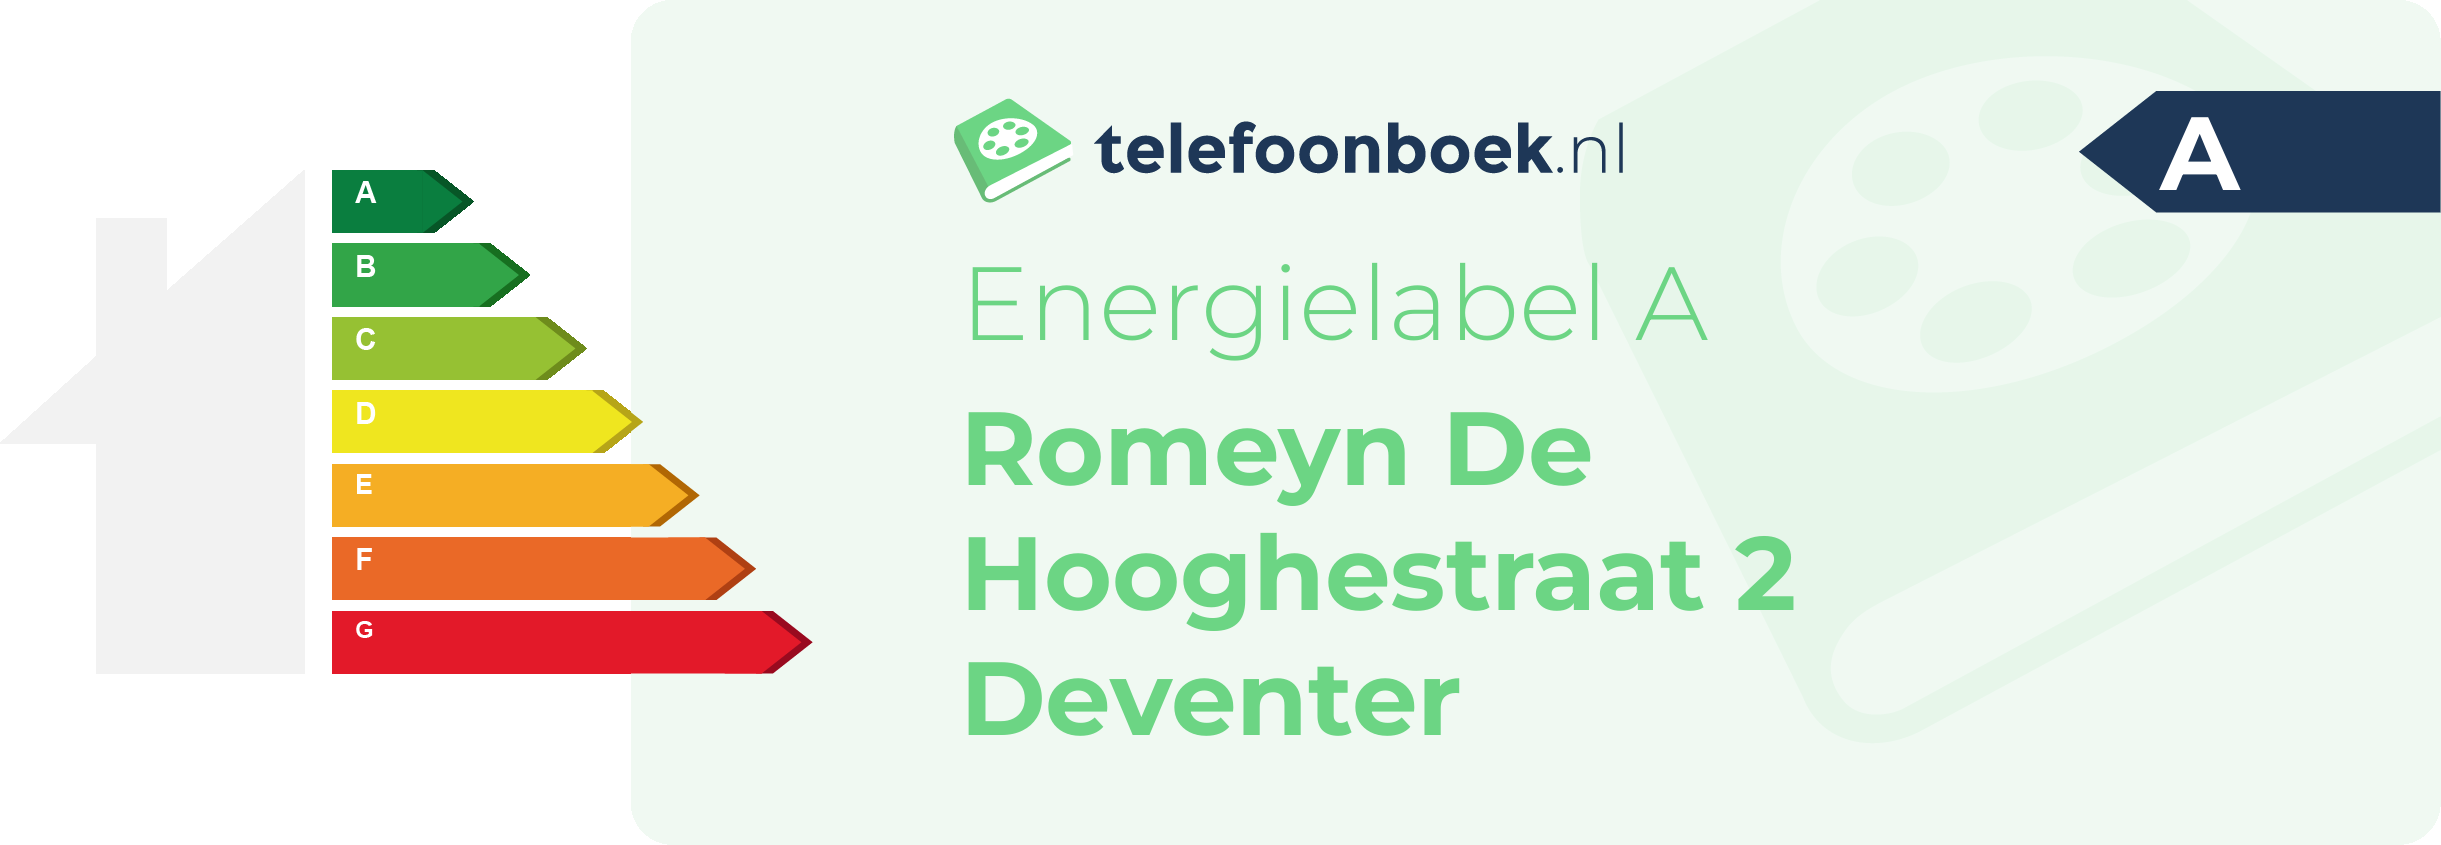 Energielabel Romeyn De Hooghestraat 2 Deventer